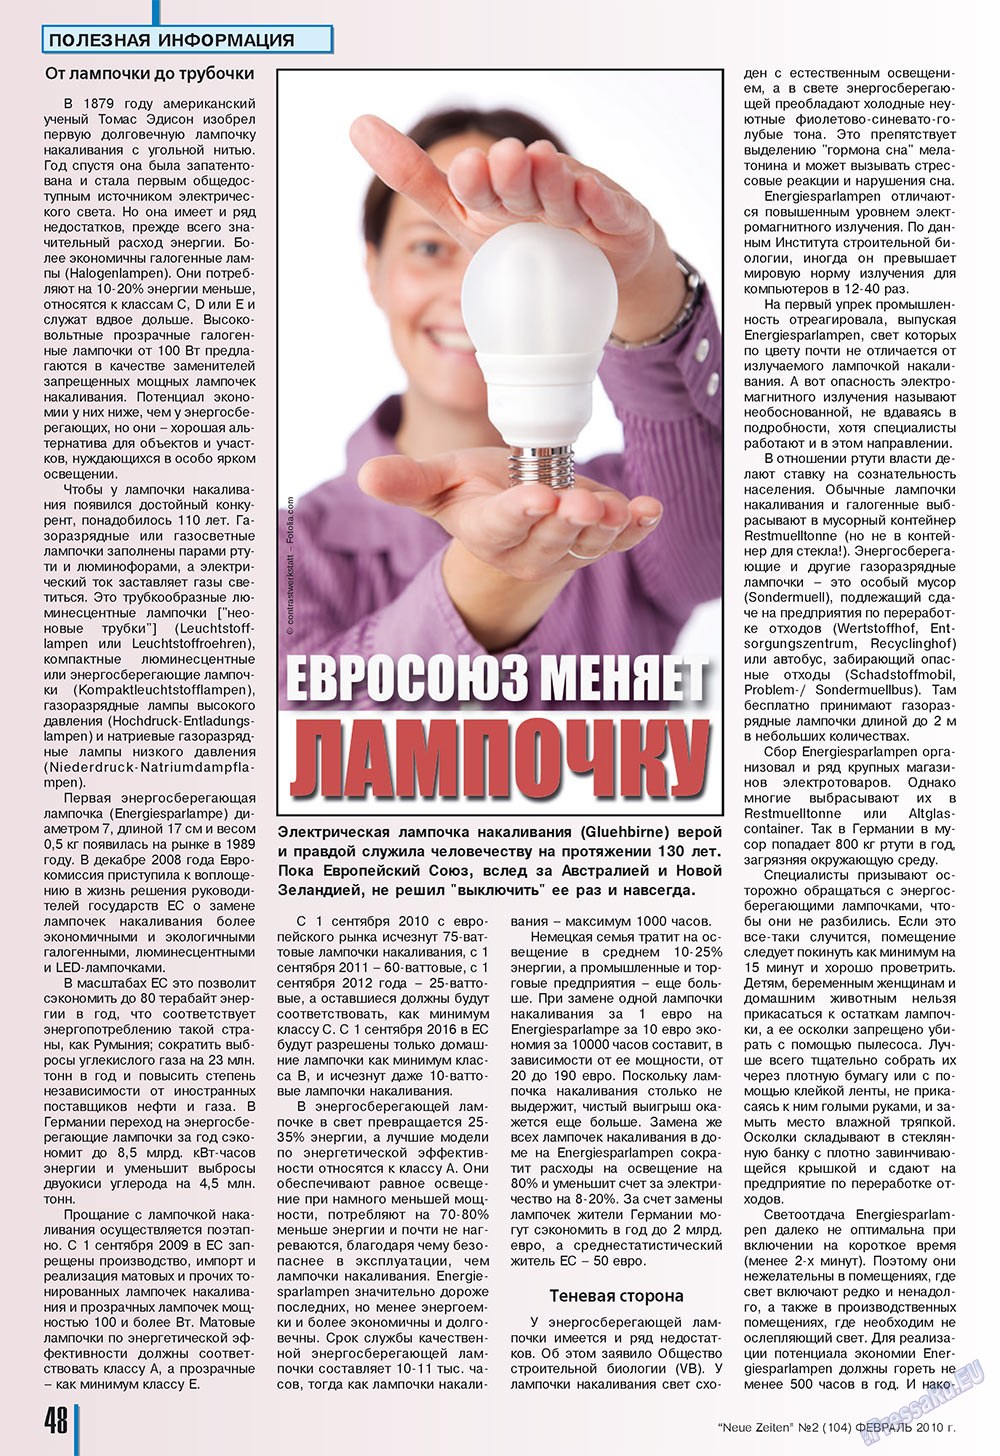 Neue Zeiten (журнал). 2010 год, номер 2, стр. 48